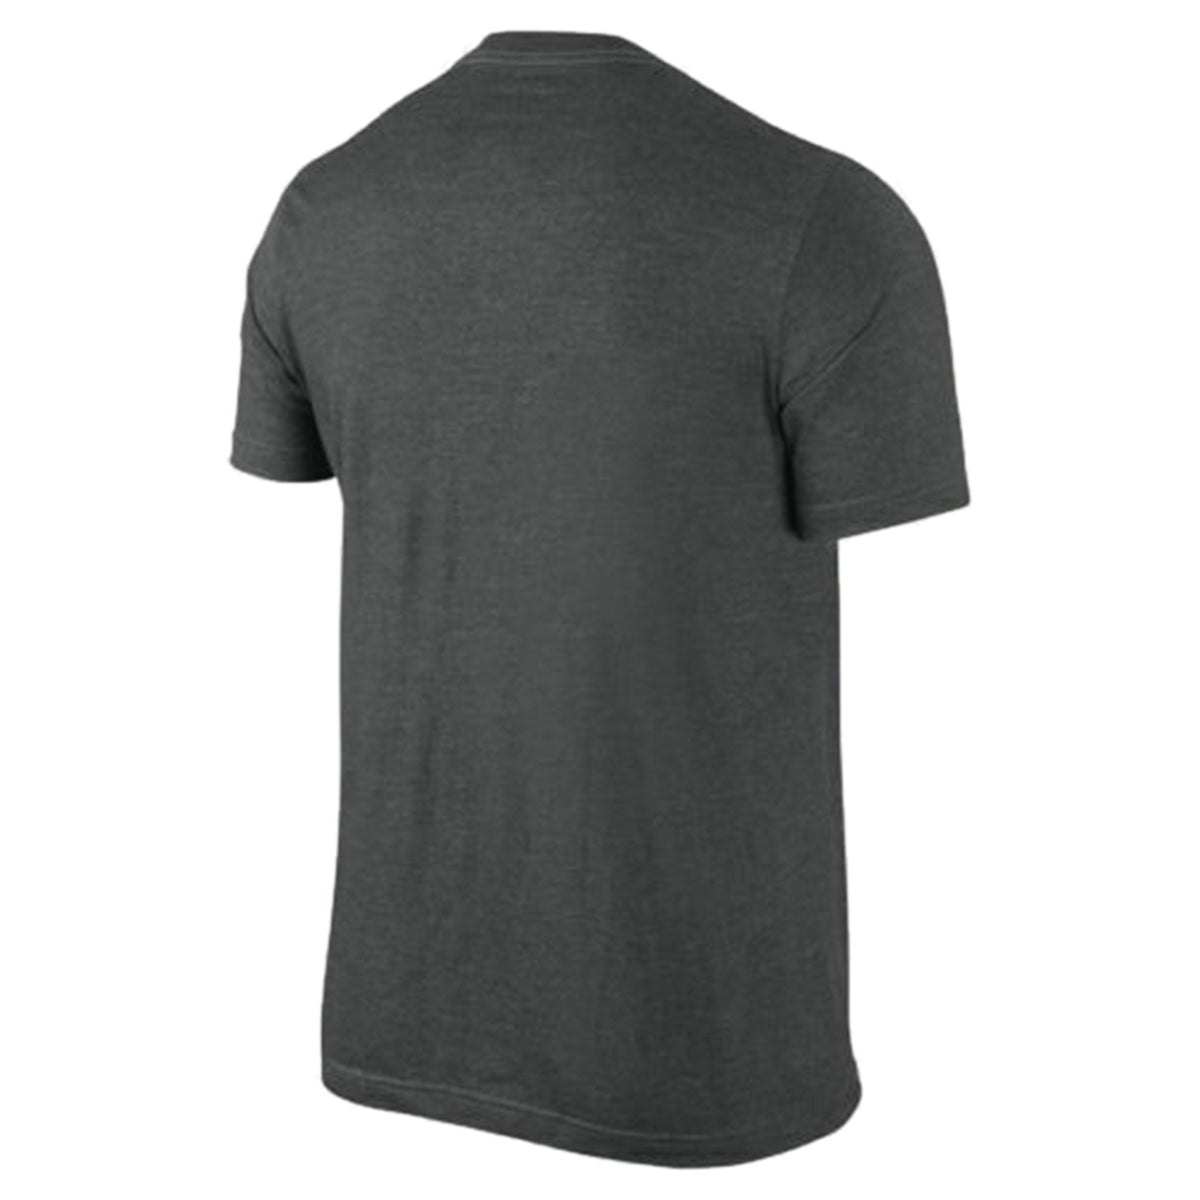 Nike Print T-shirt Mens Style : 577893